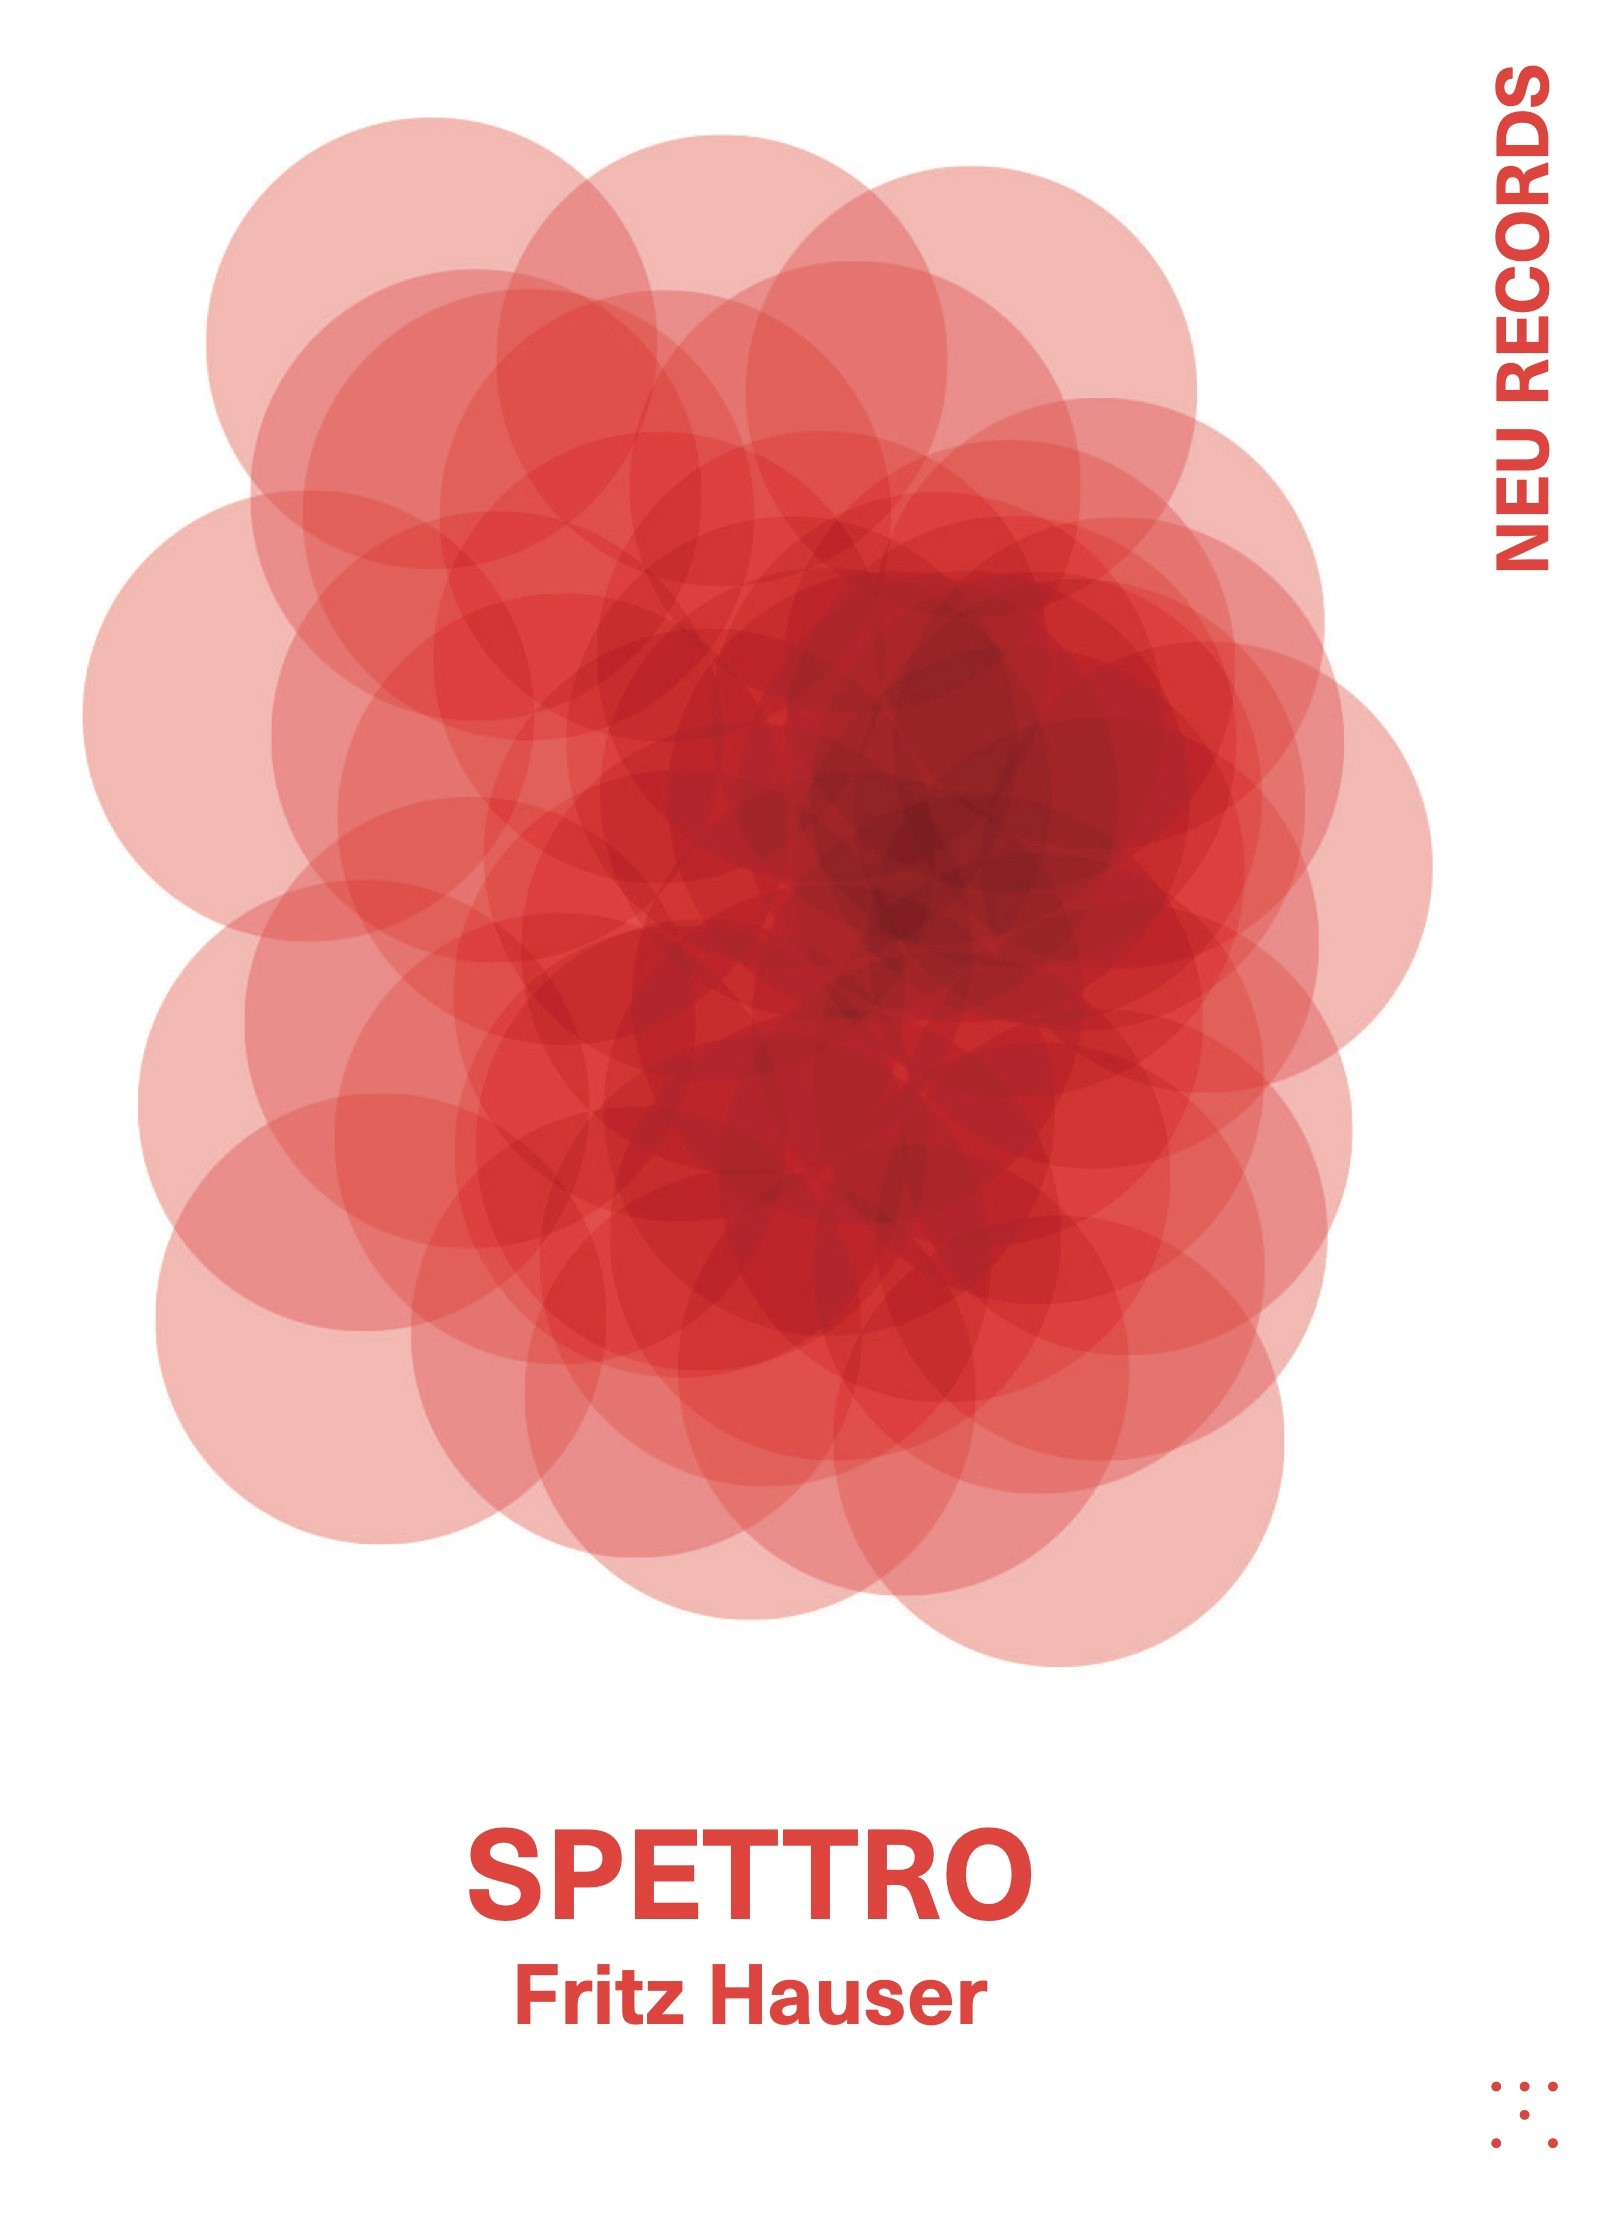 Novedades discográficas: «Fritz Hauser: Spettro» editado en Neu Records